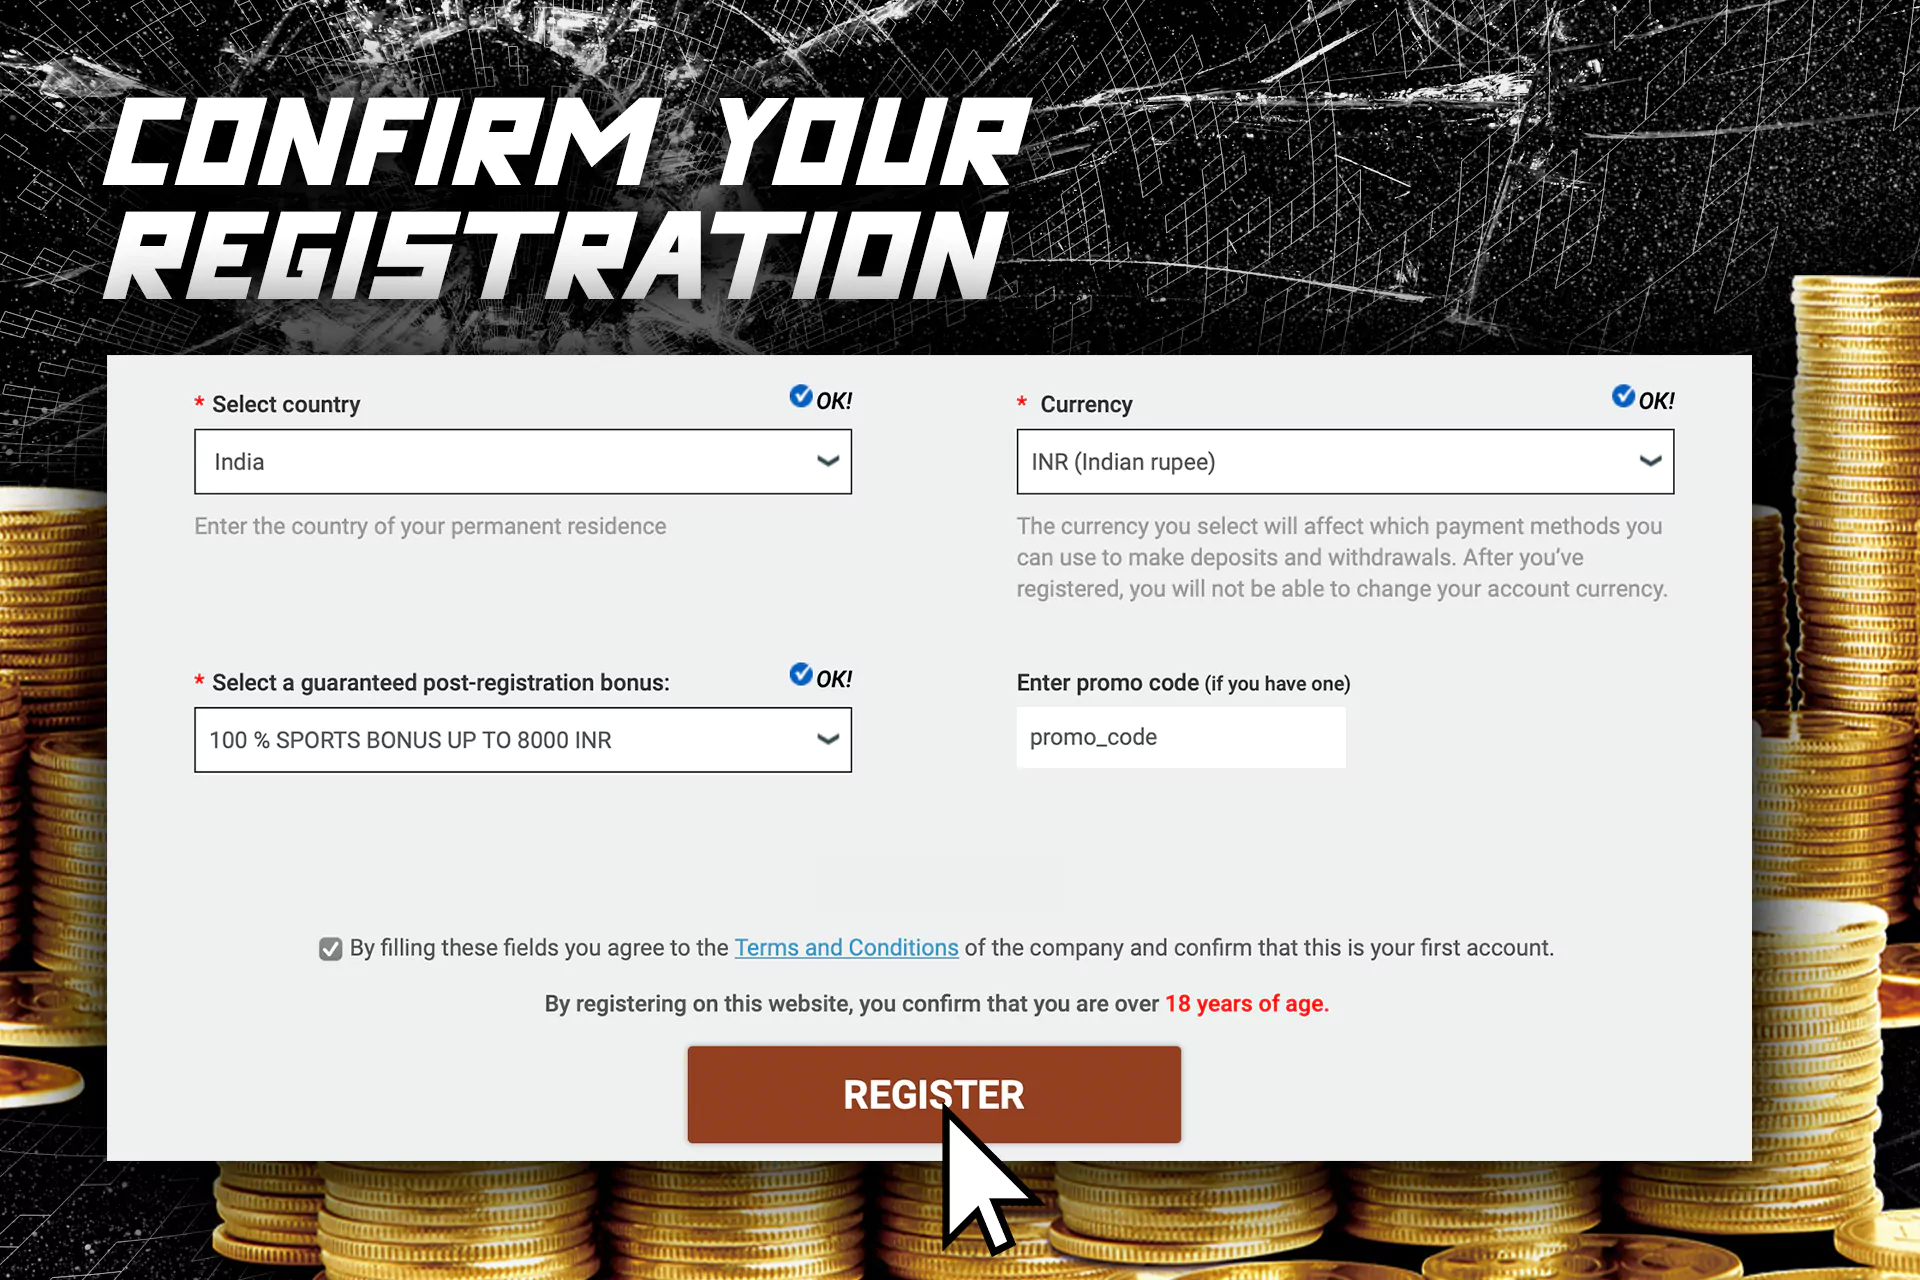 Confirm registration process.